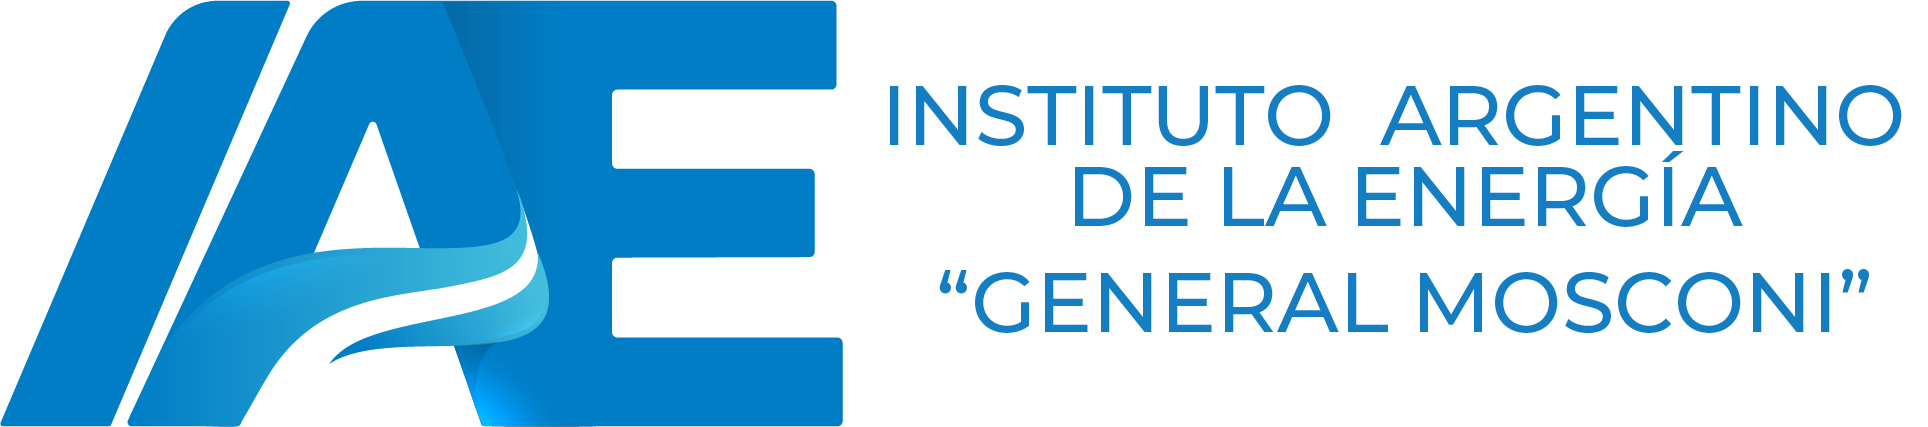 IAE "General Mosconi" - Instituto Argentino de la Energía "General Mosconi"